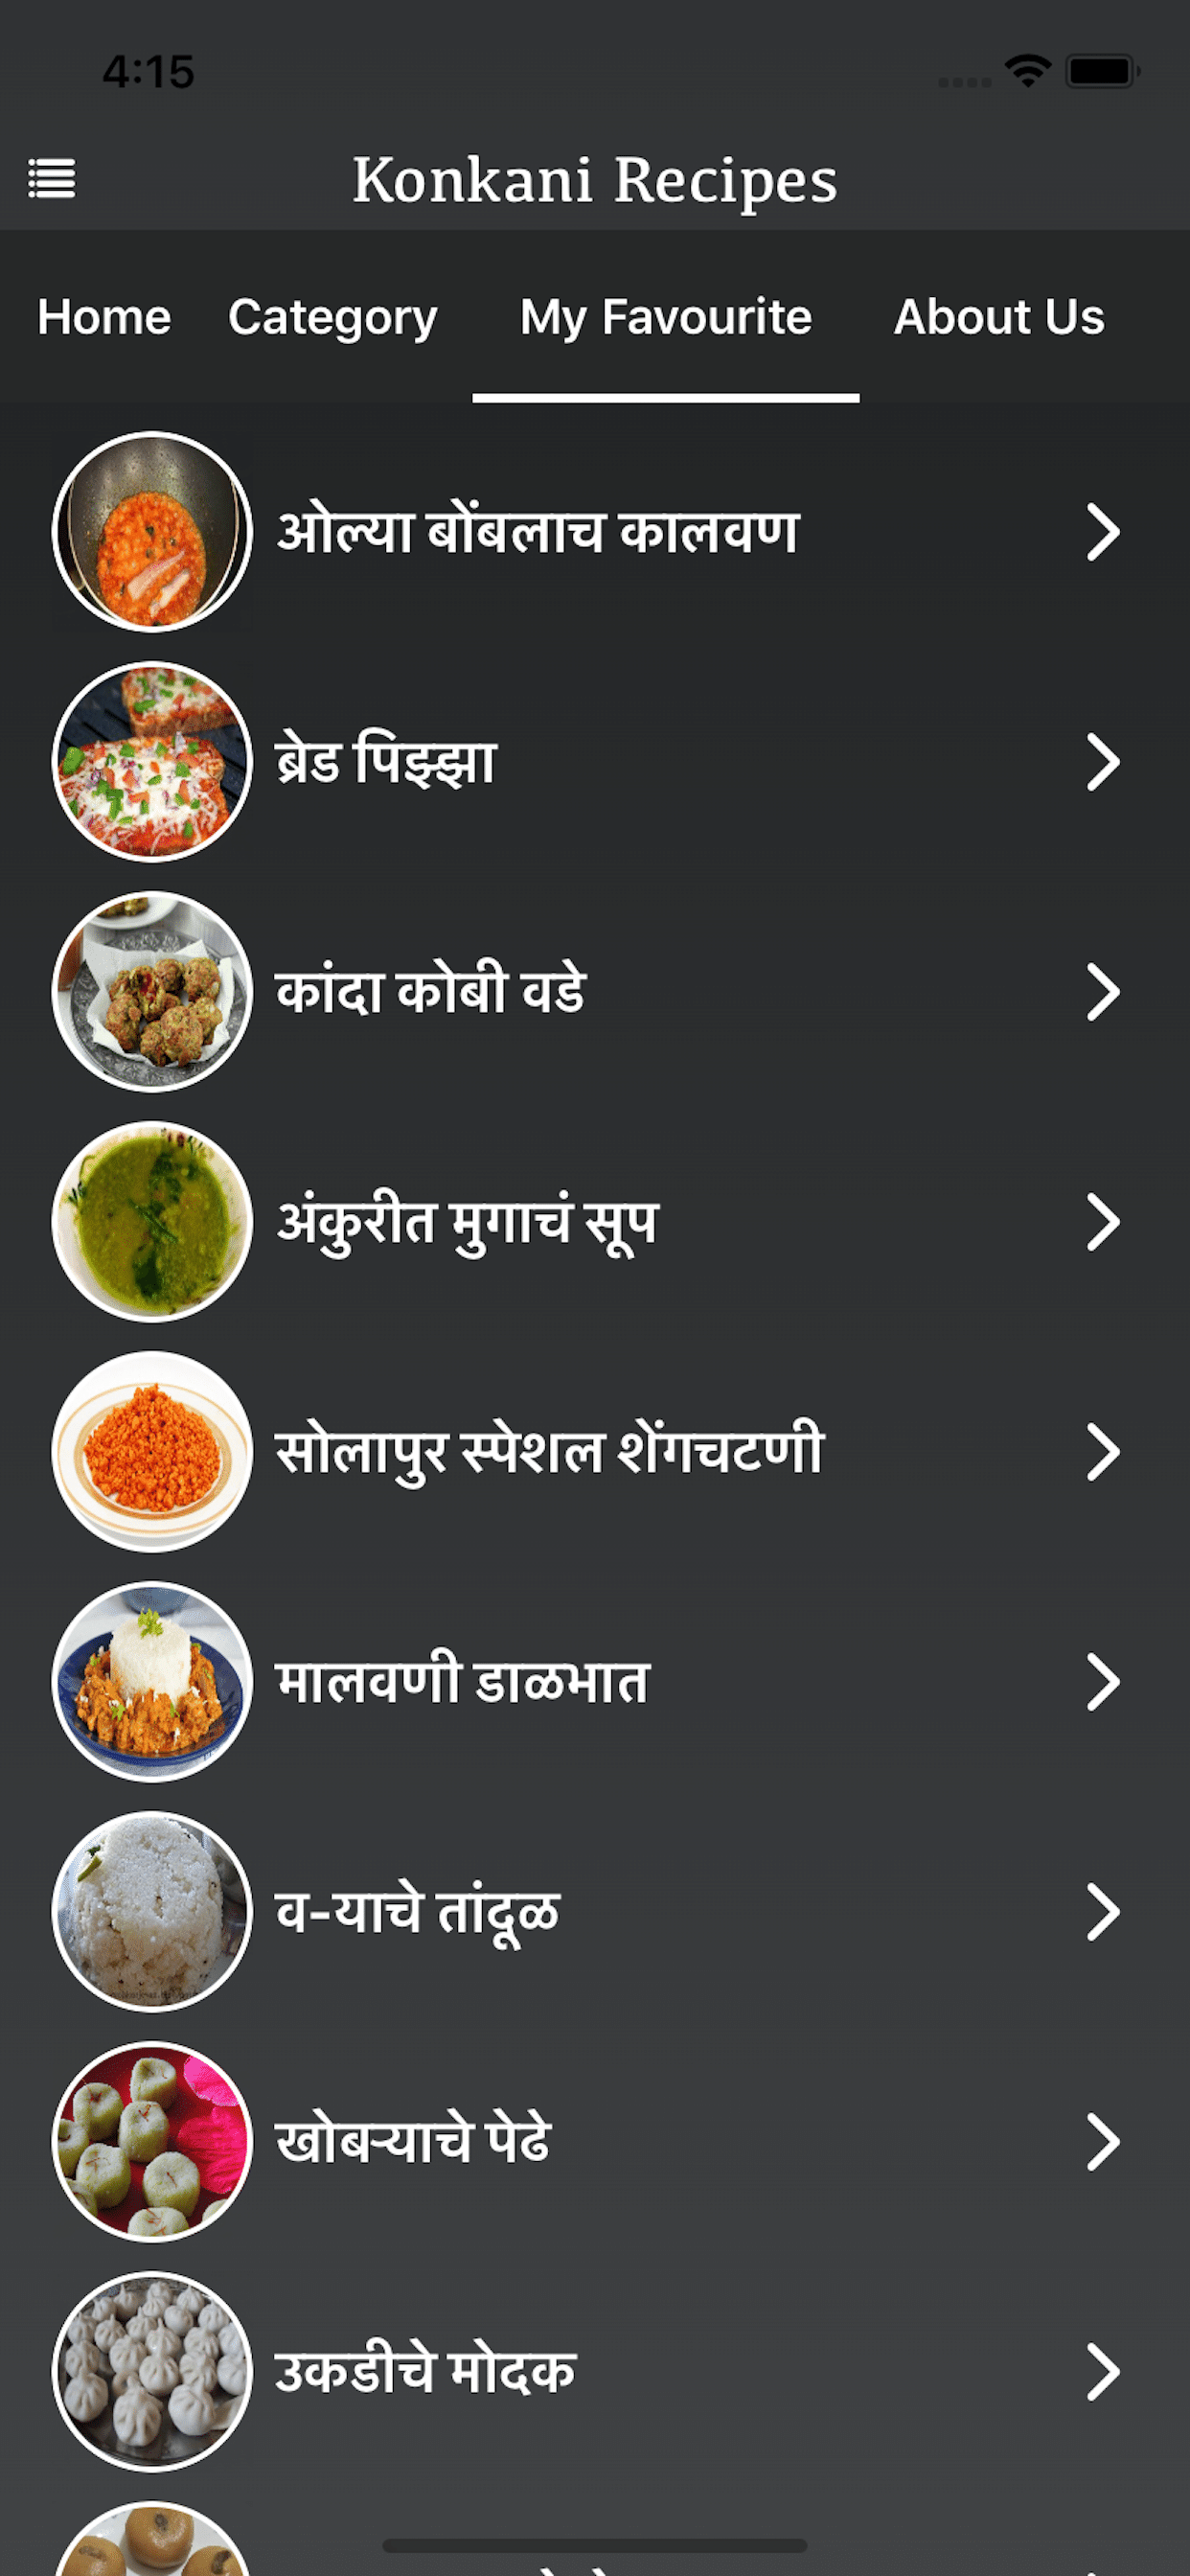 Konkani-Recipes-Application